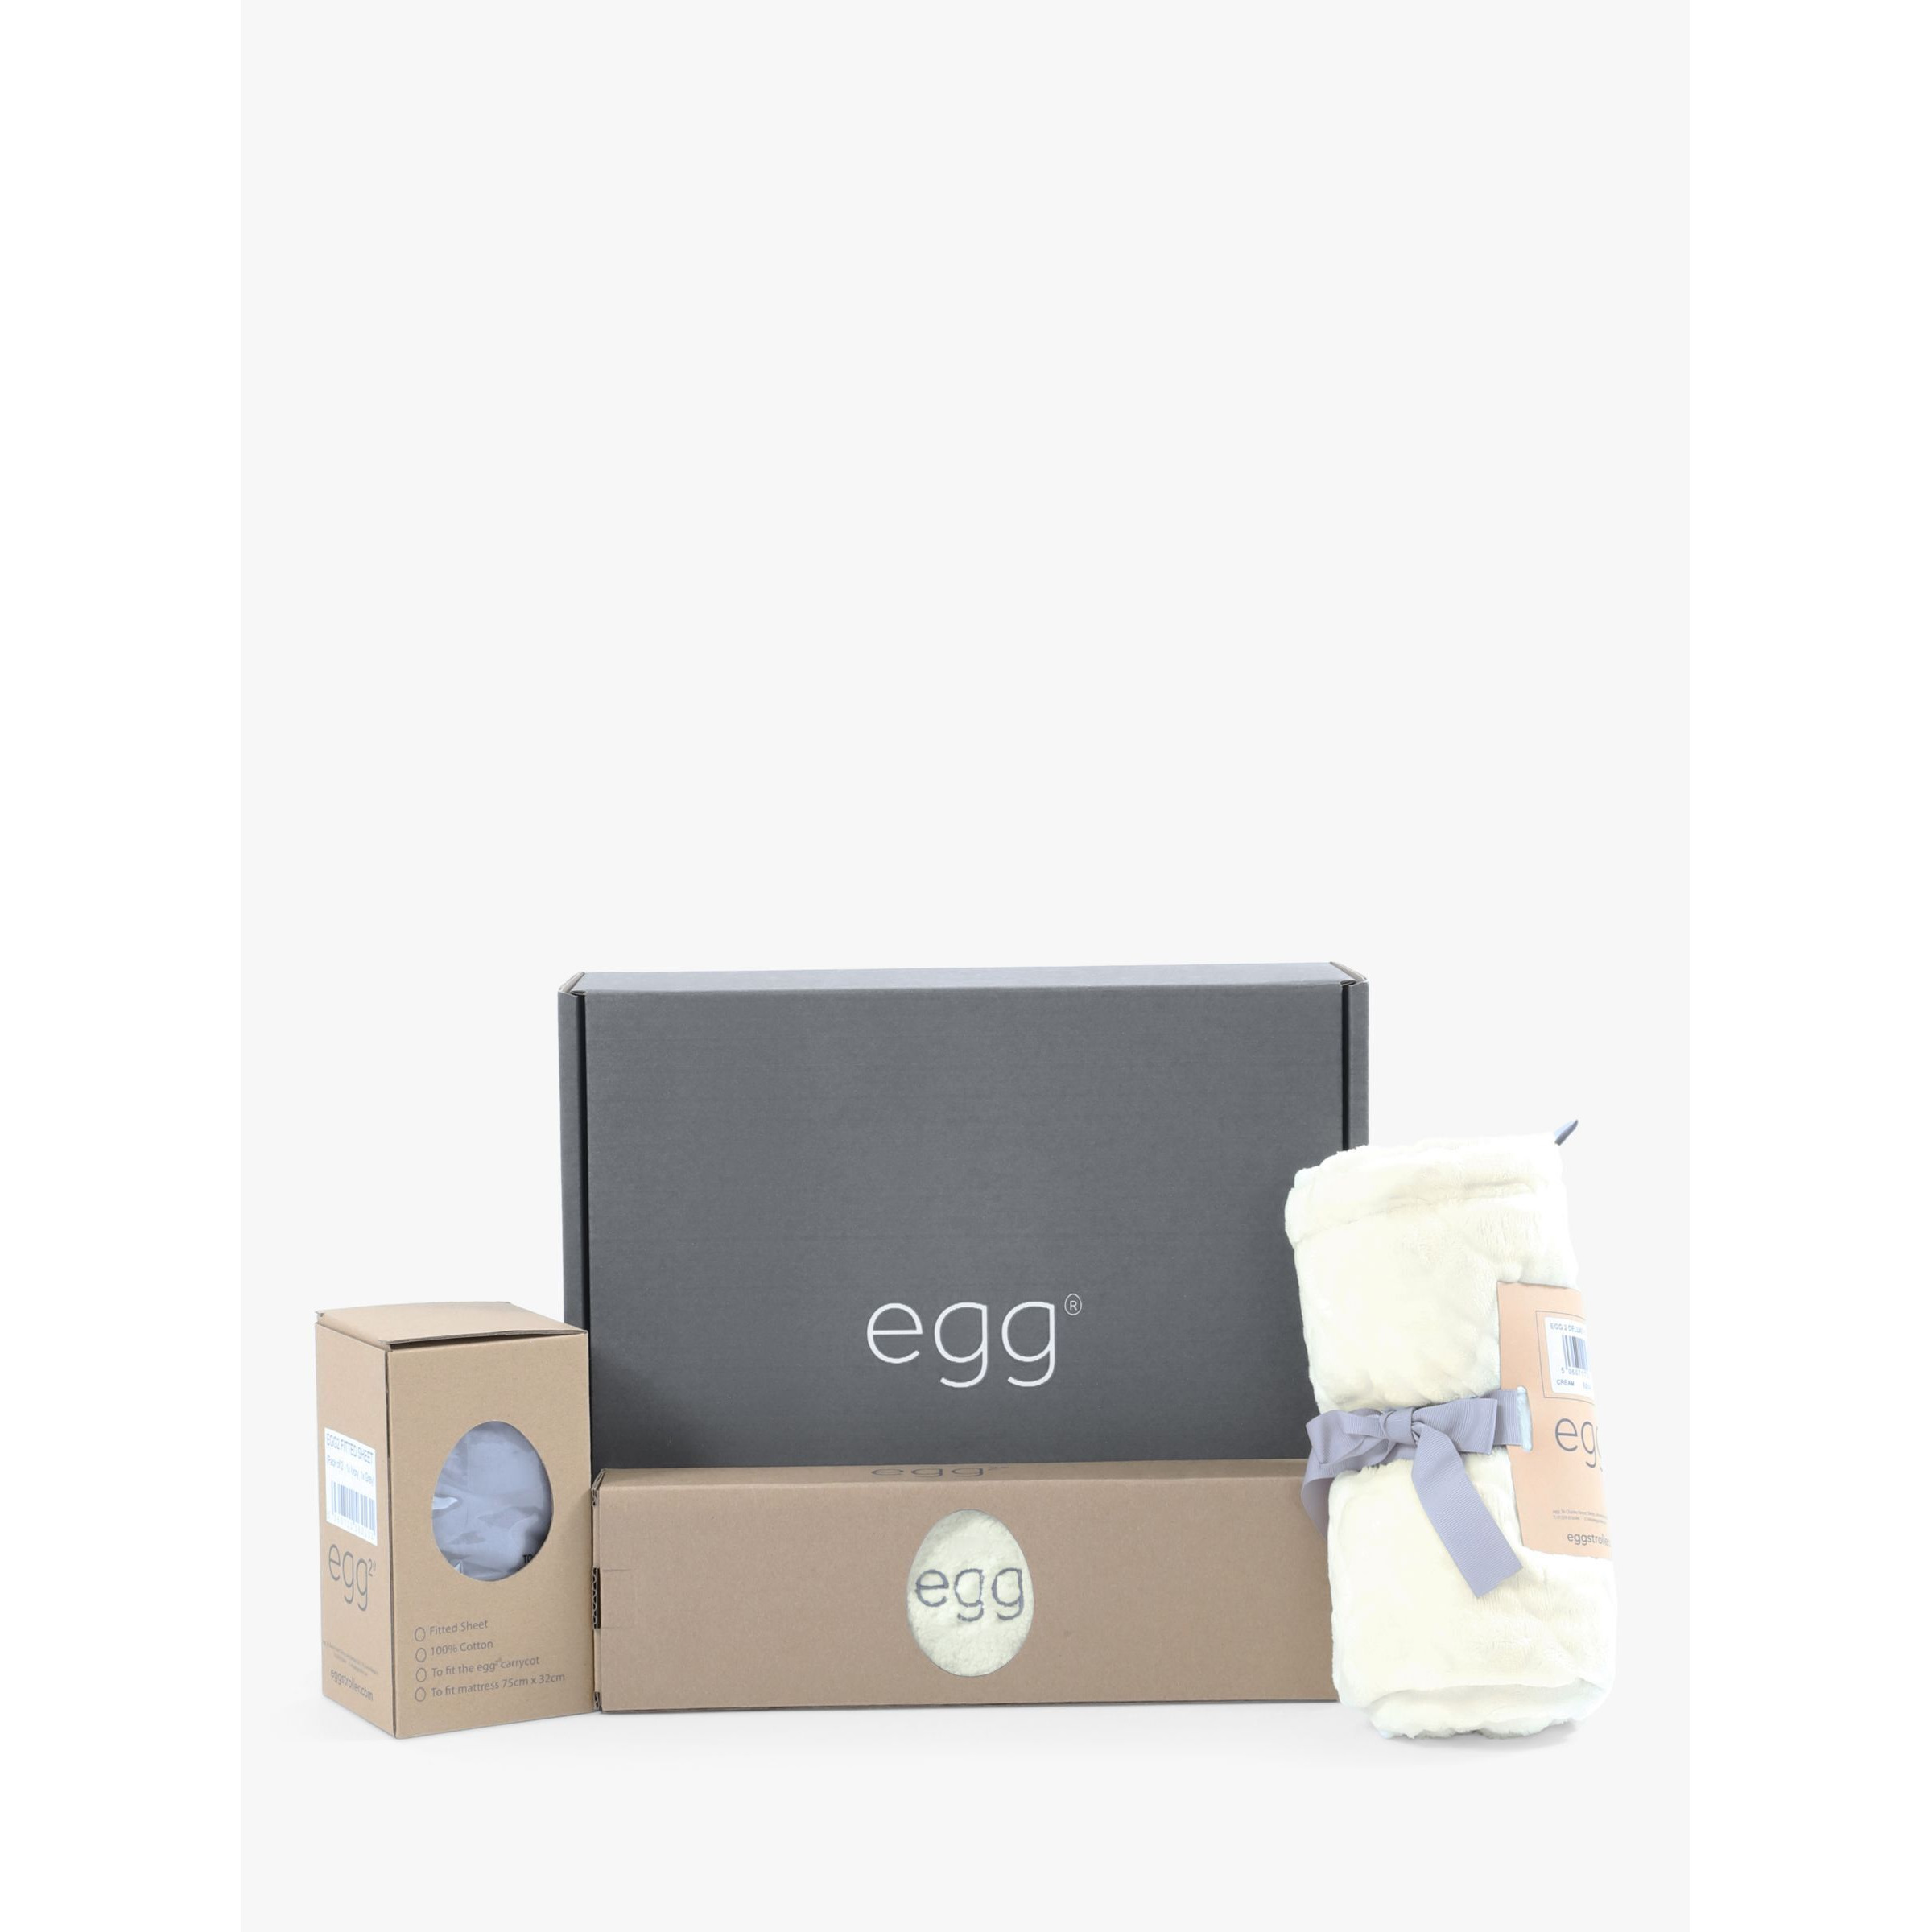 egg Blanket, Mattress Topper & Carrycot Sheet Gift Pack - image 1